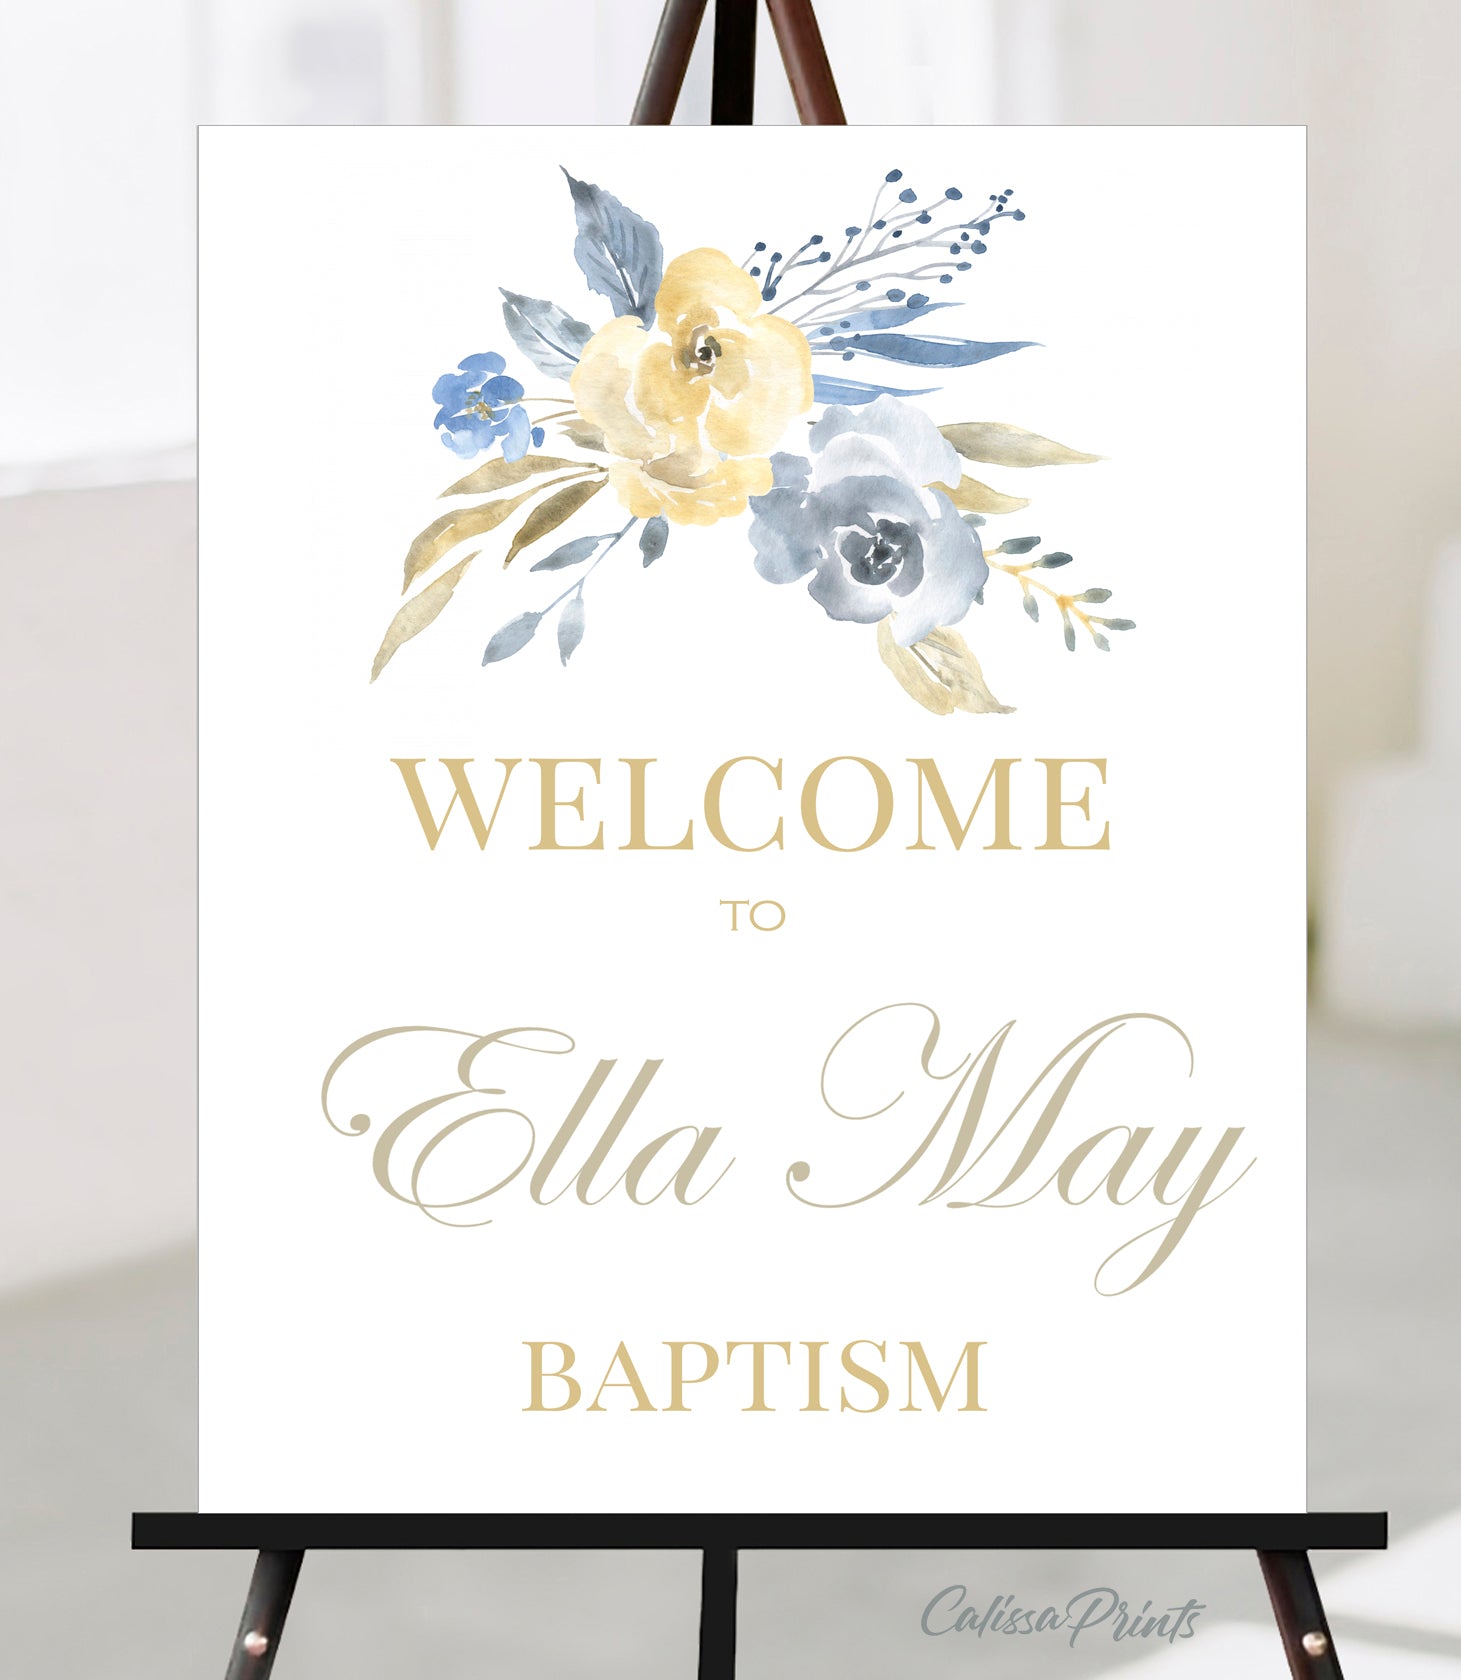 Baptism Party WELCOME Signs Templates - Aquarelle Design, BAPT10 - CalissaPrints